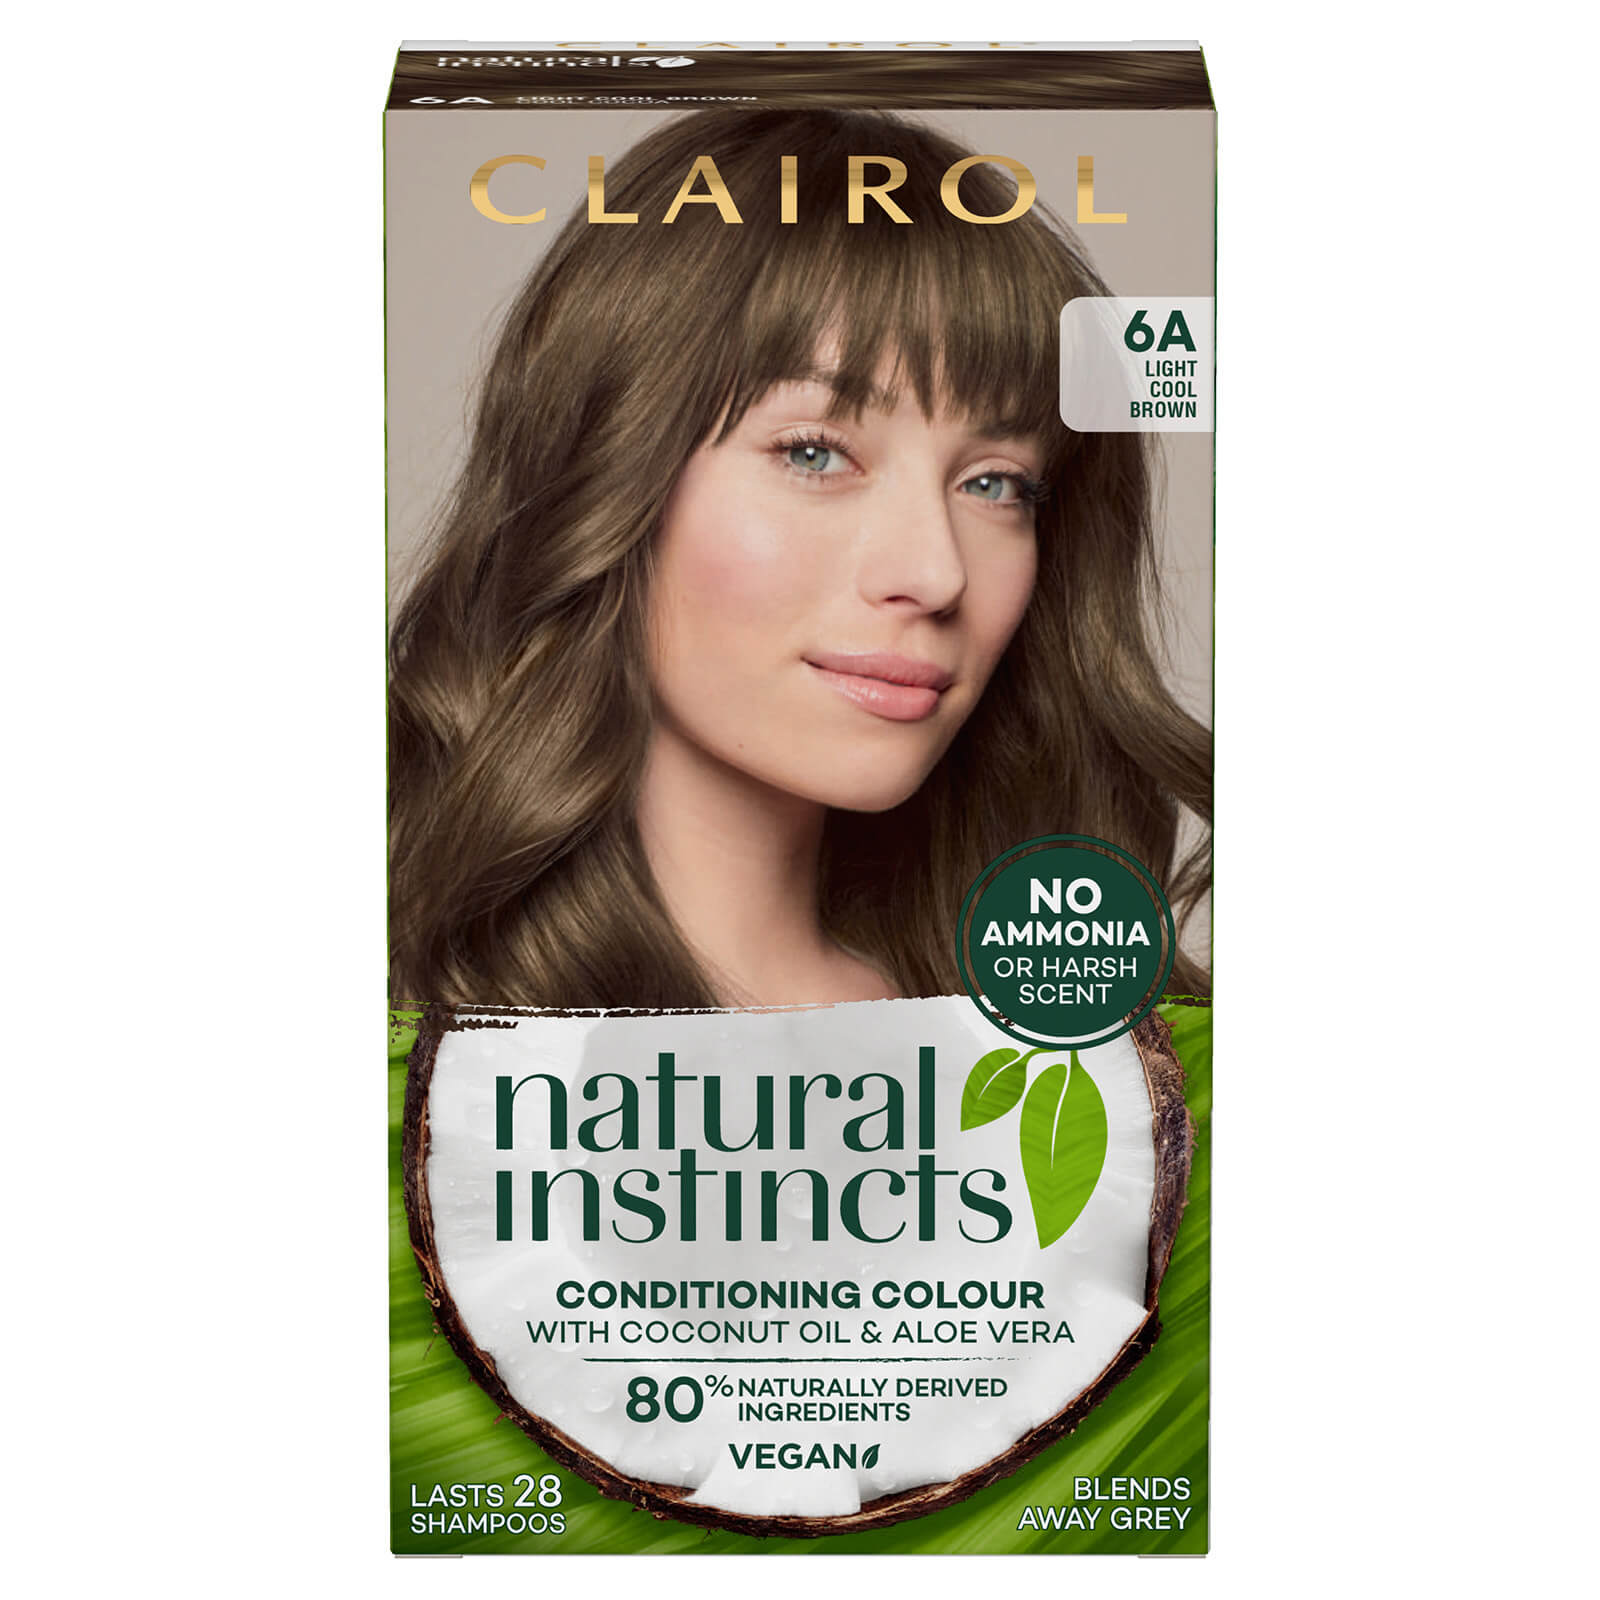 Clairol Natural Instincts Semi-Permanent No Ammonia Vegan Hair Dye 177ml (Various Shades) - 6A Light Cool Brown